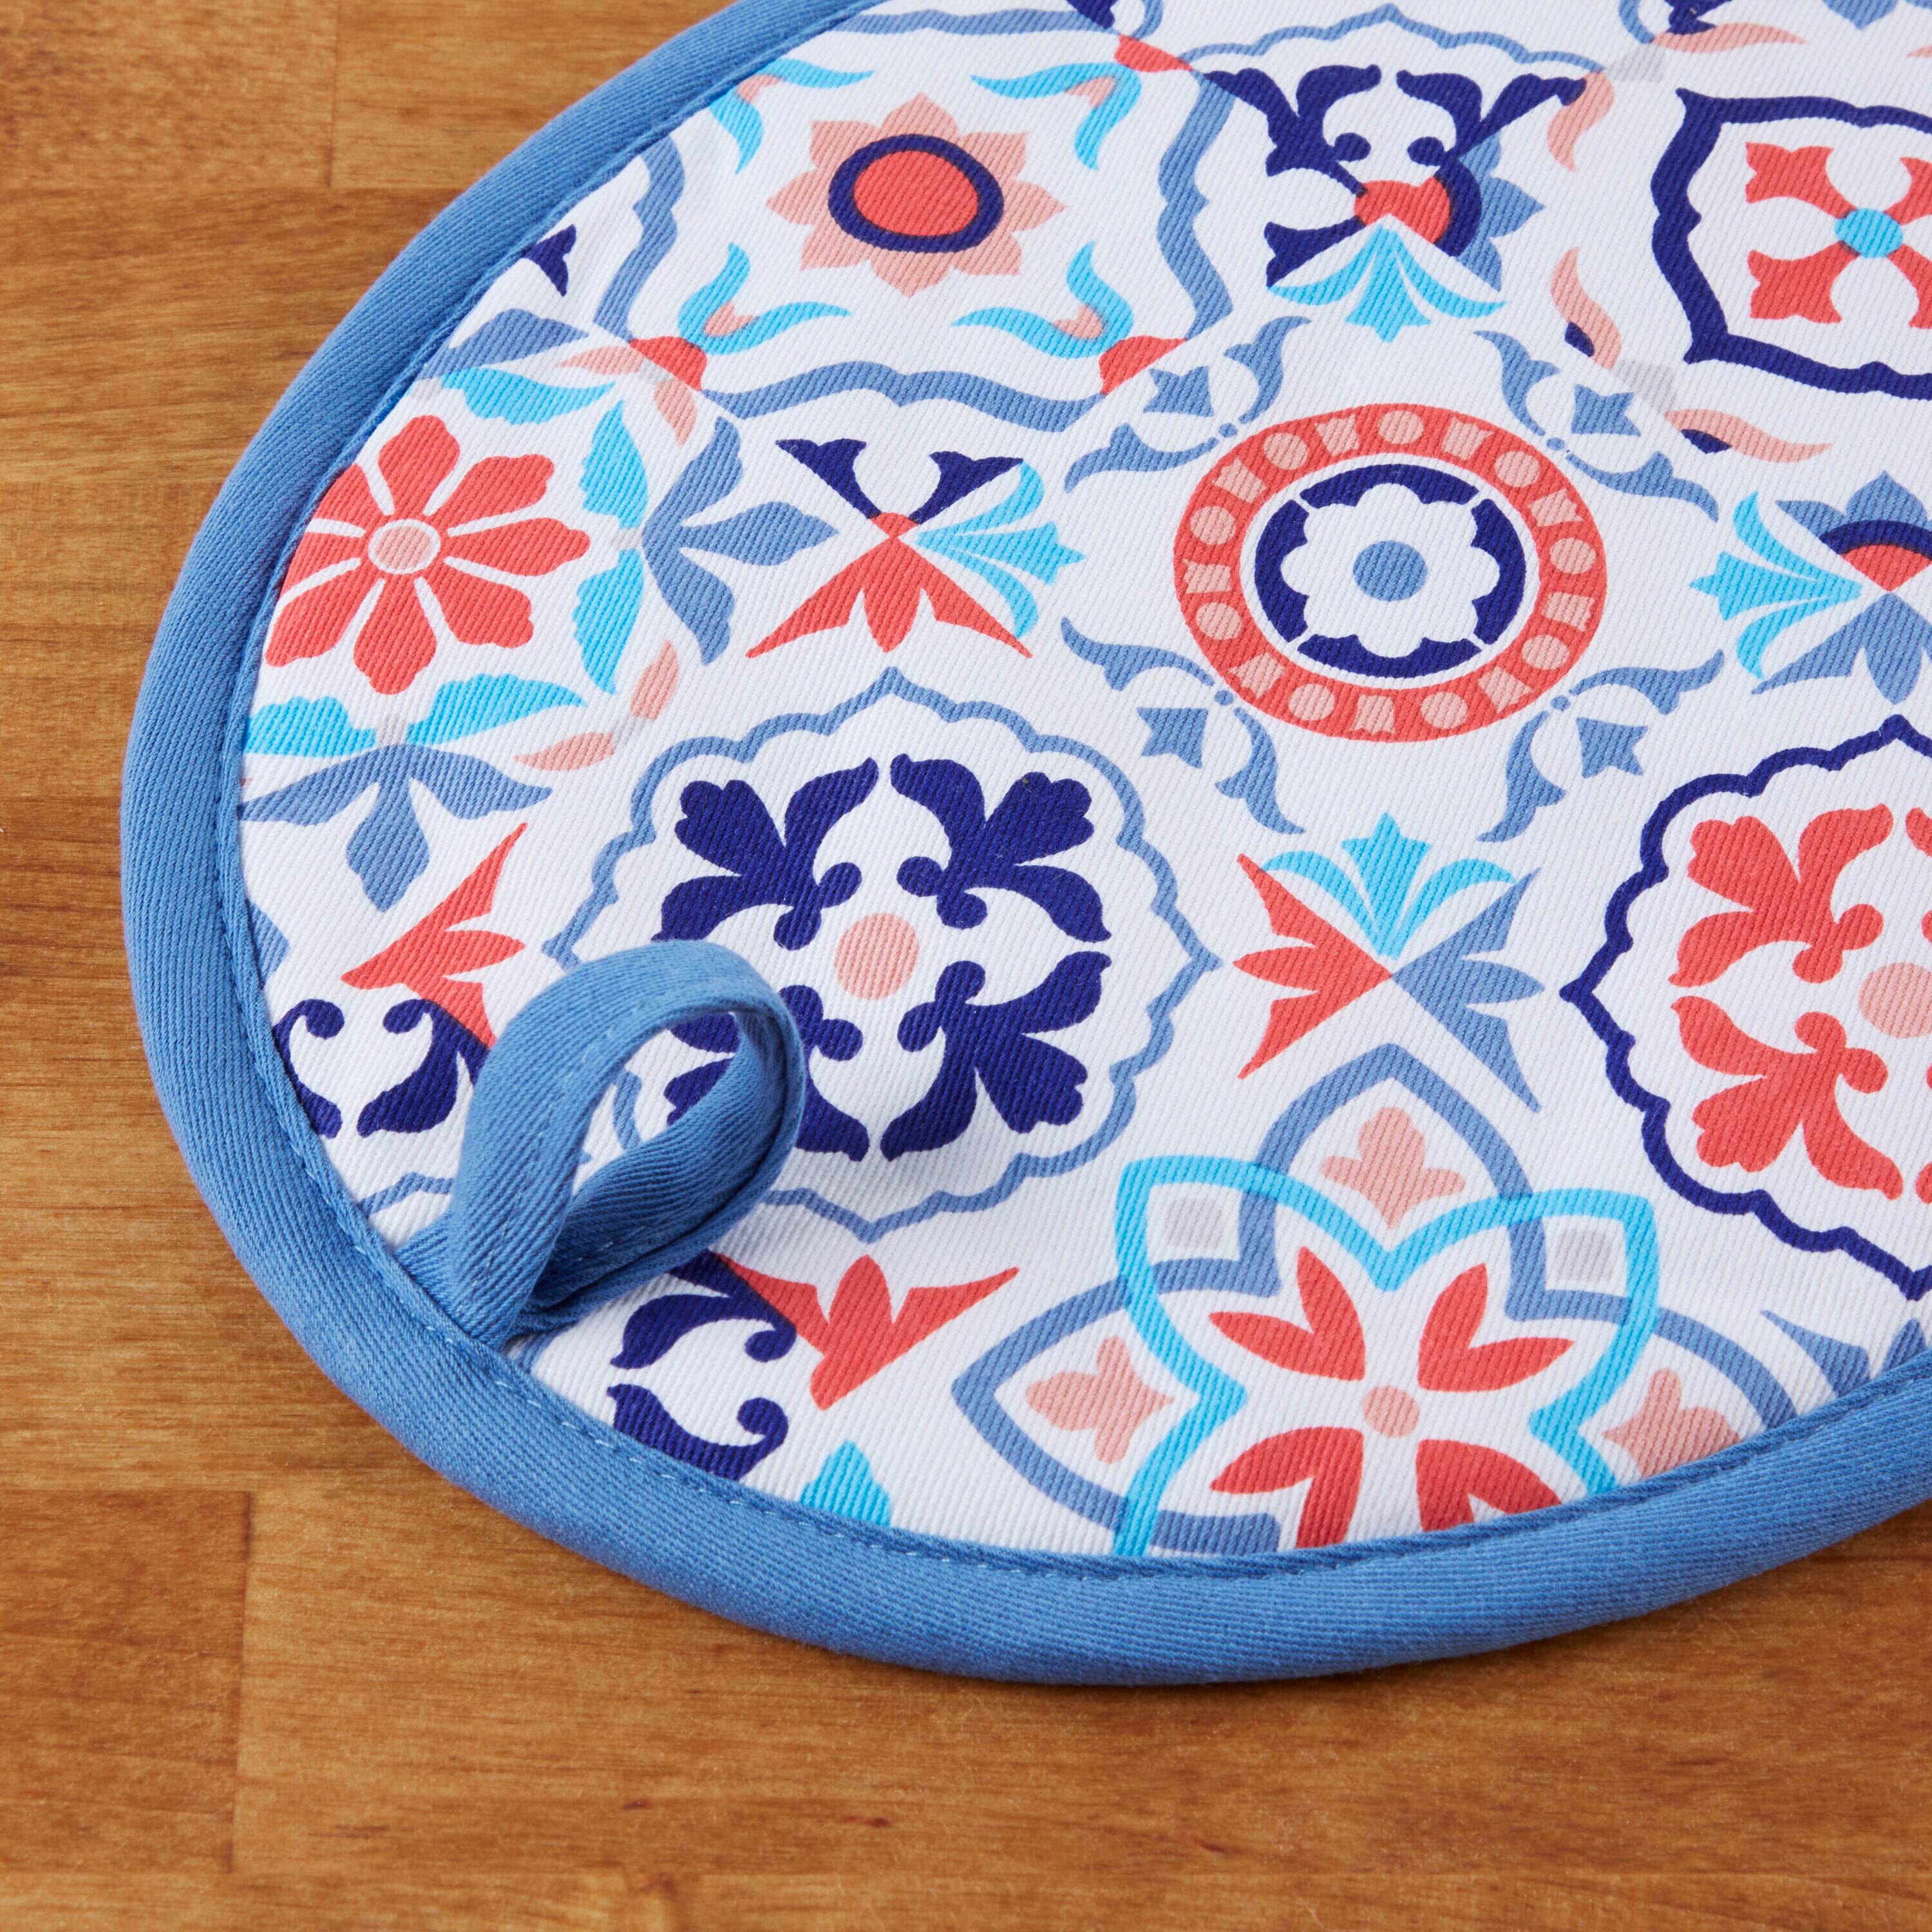 Fiesta Worn Tiles Kitchen Towel 2-Pack Set, Blue, Cotton